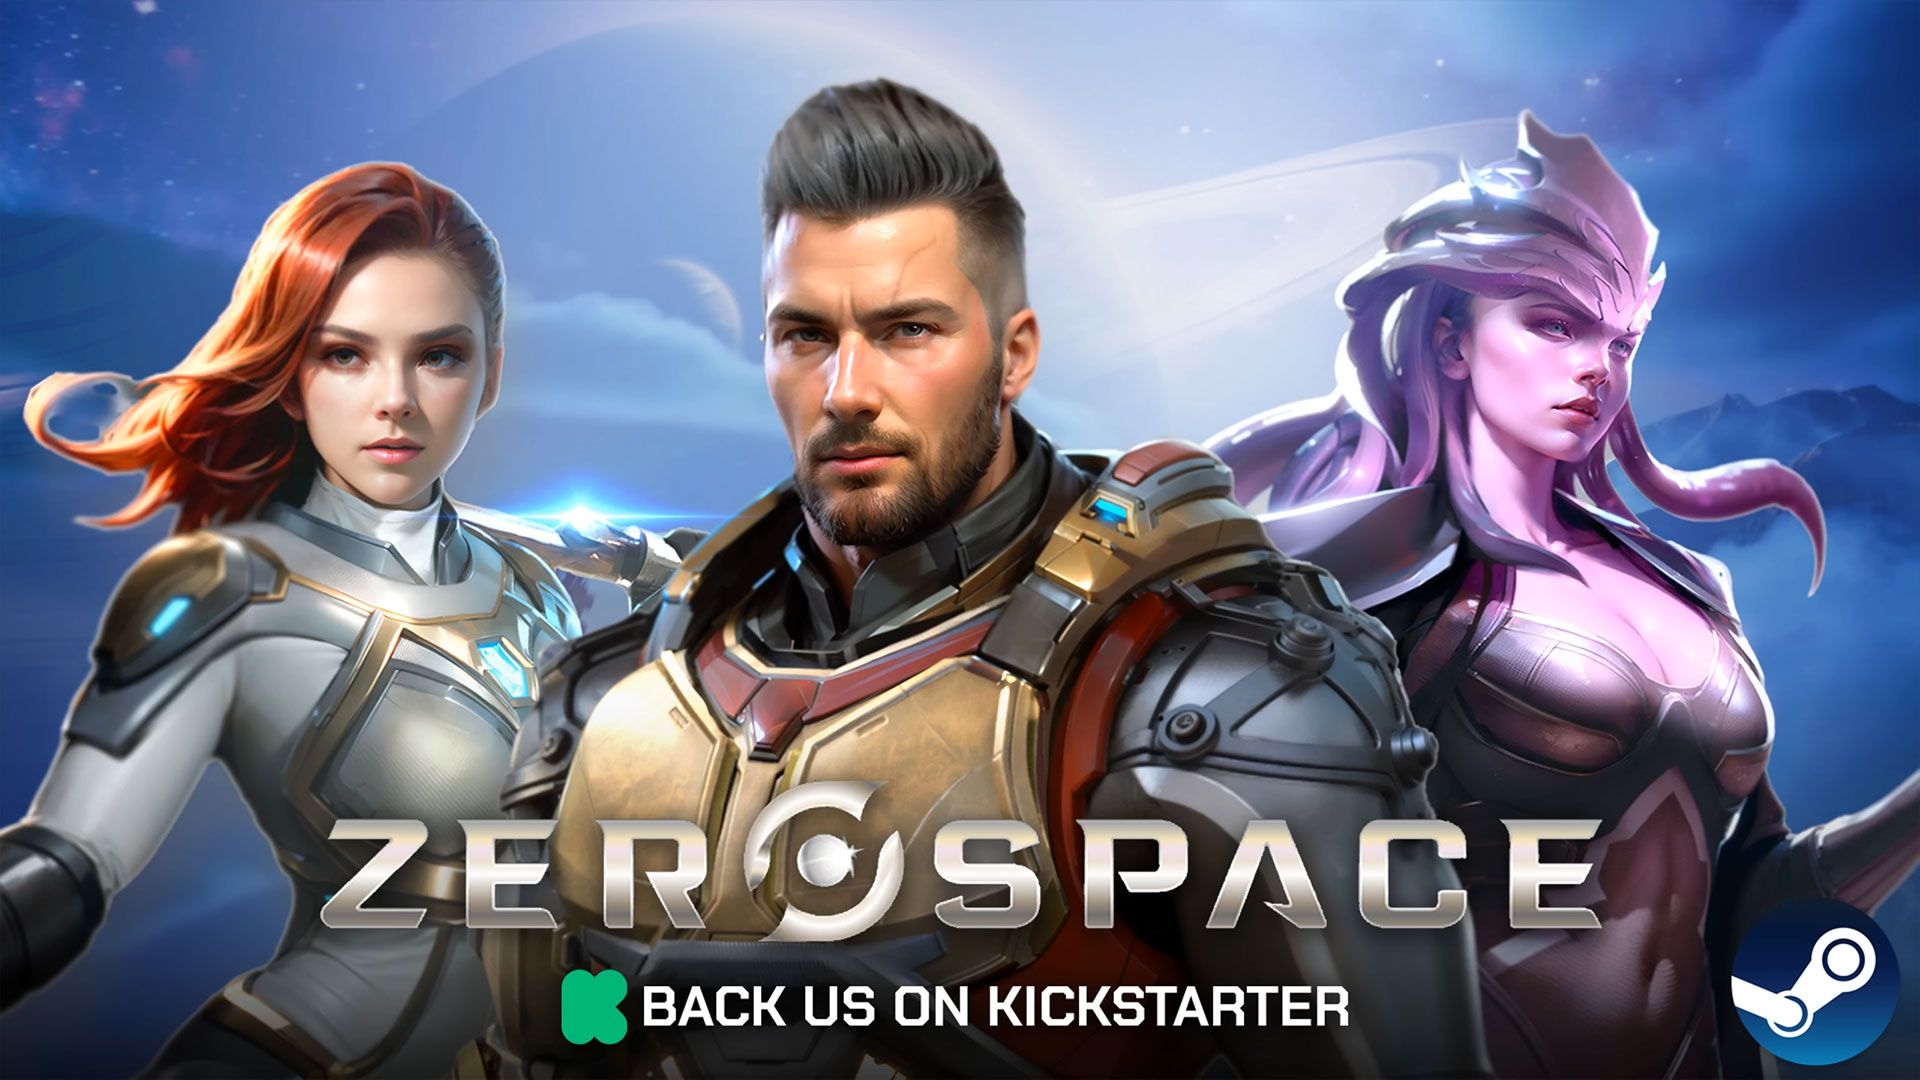 ZeroSpace has already hit its initial Kickstarter goal